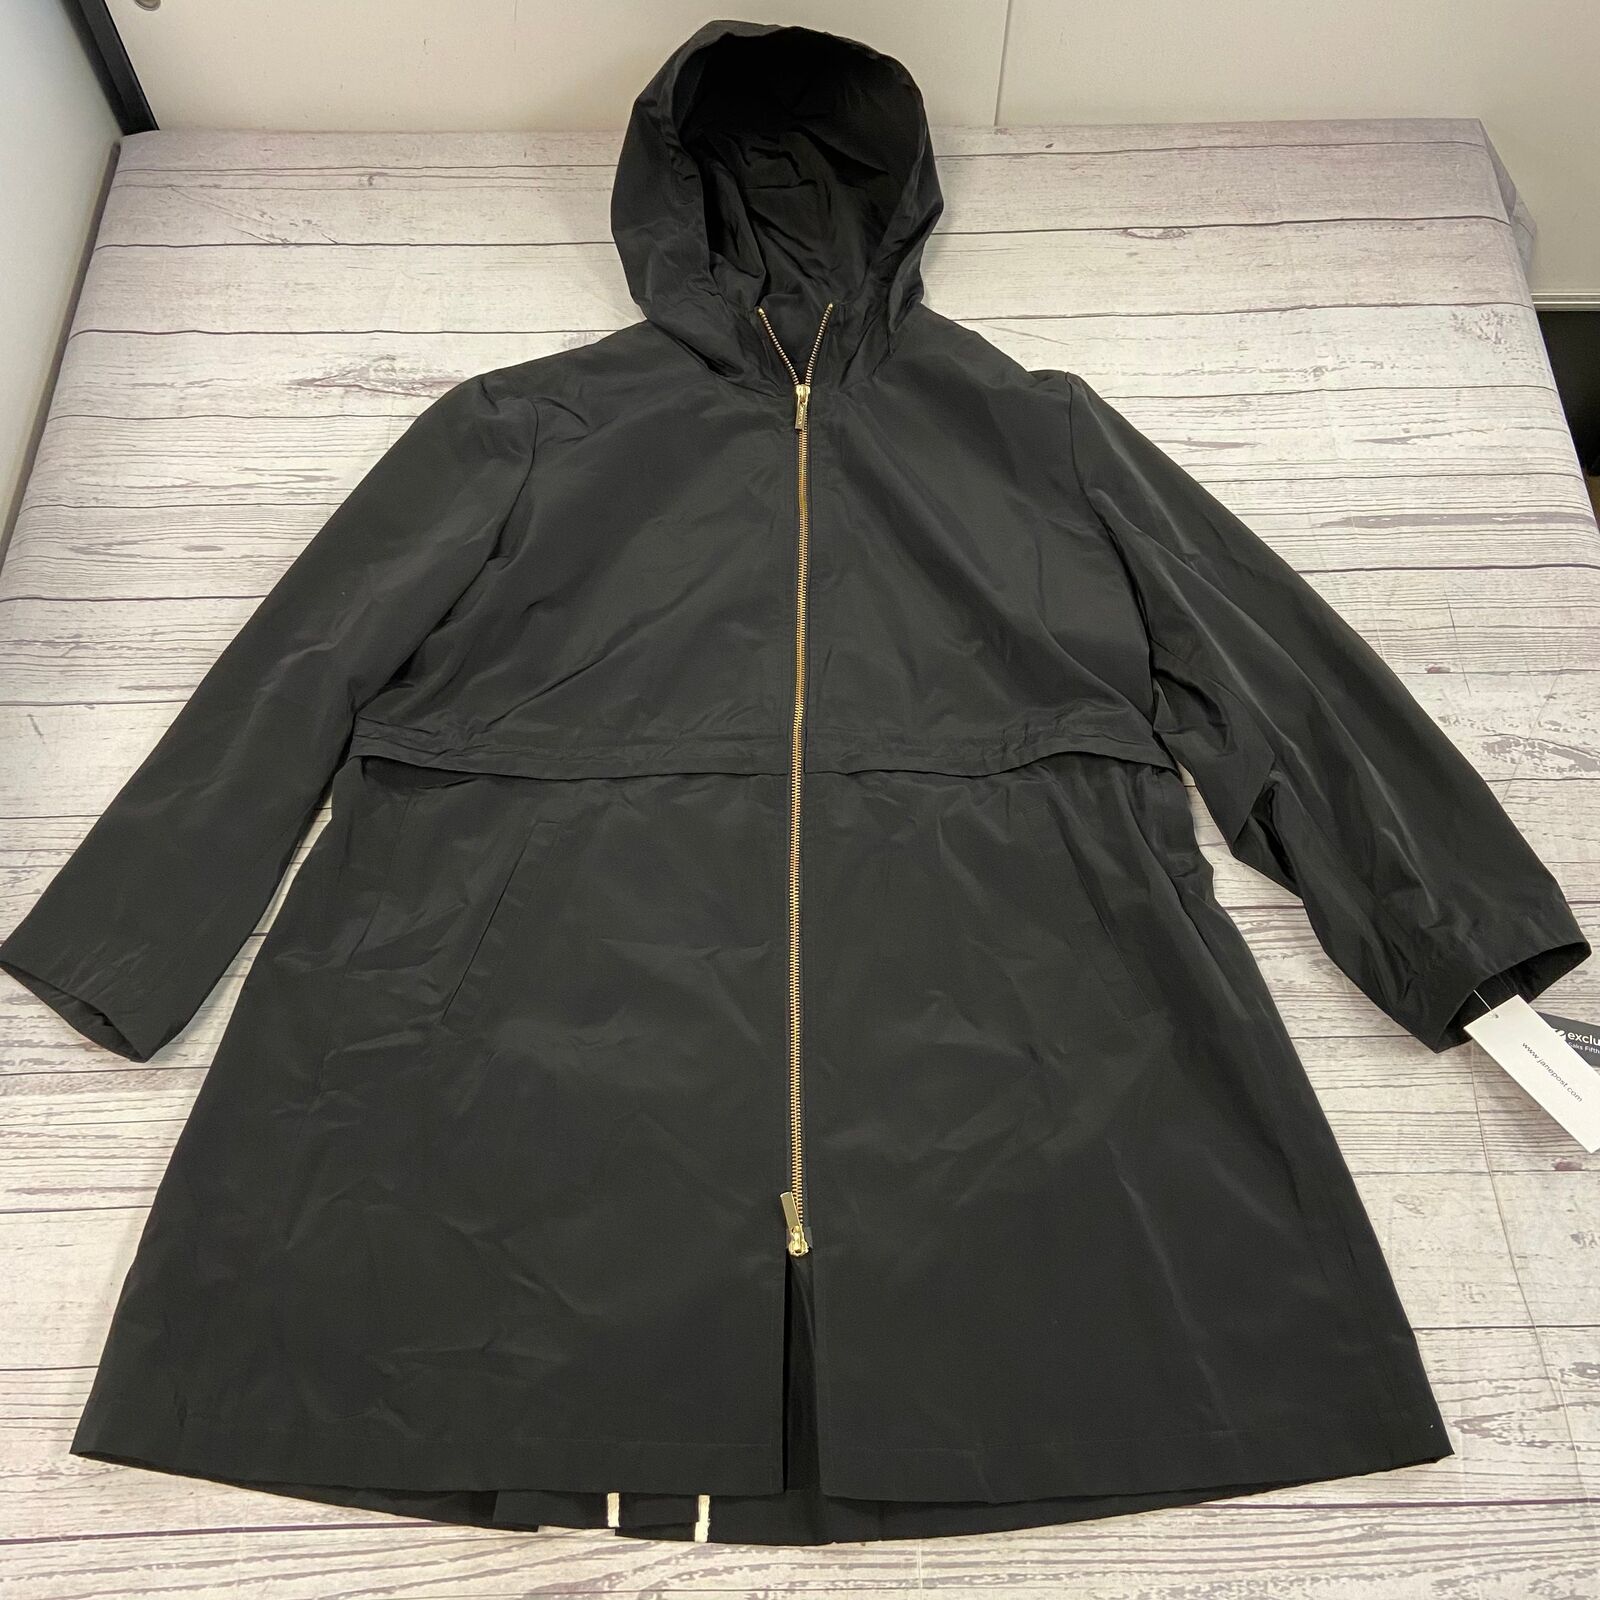 Jane Post Black Zip Up Hooded Trench Rain Coat Jacket Women Size XL NEW